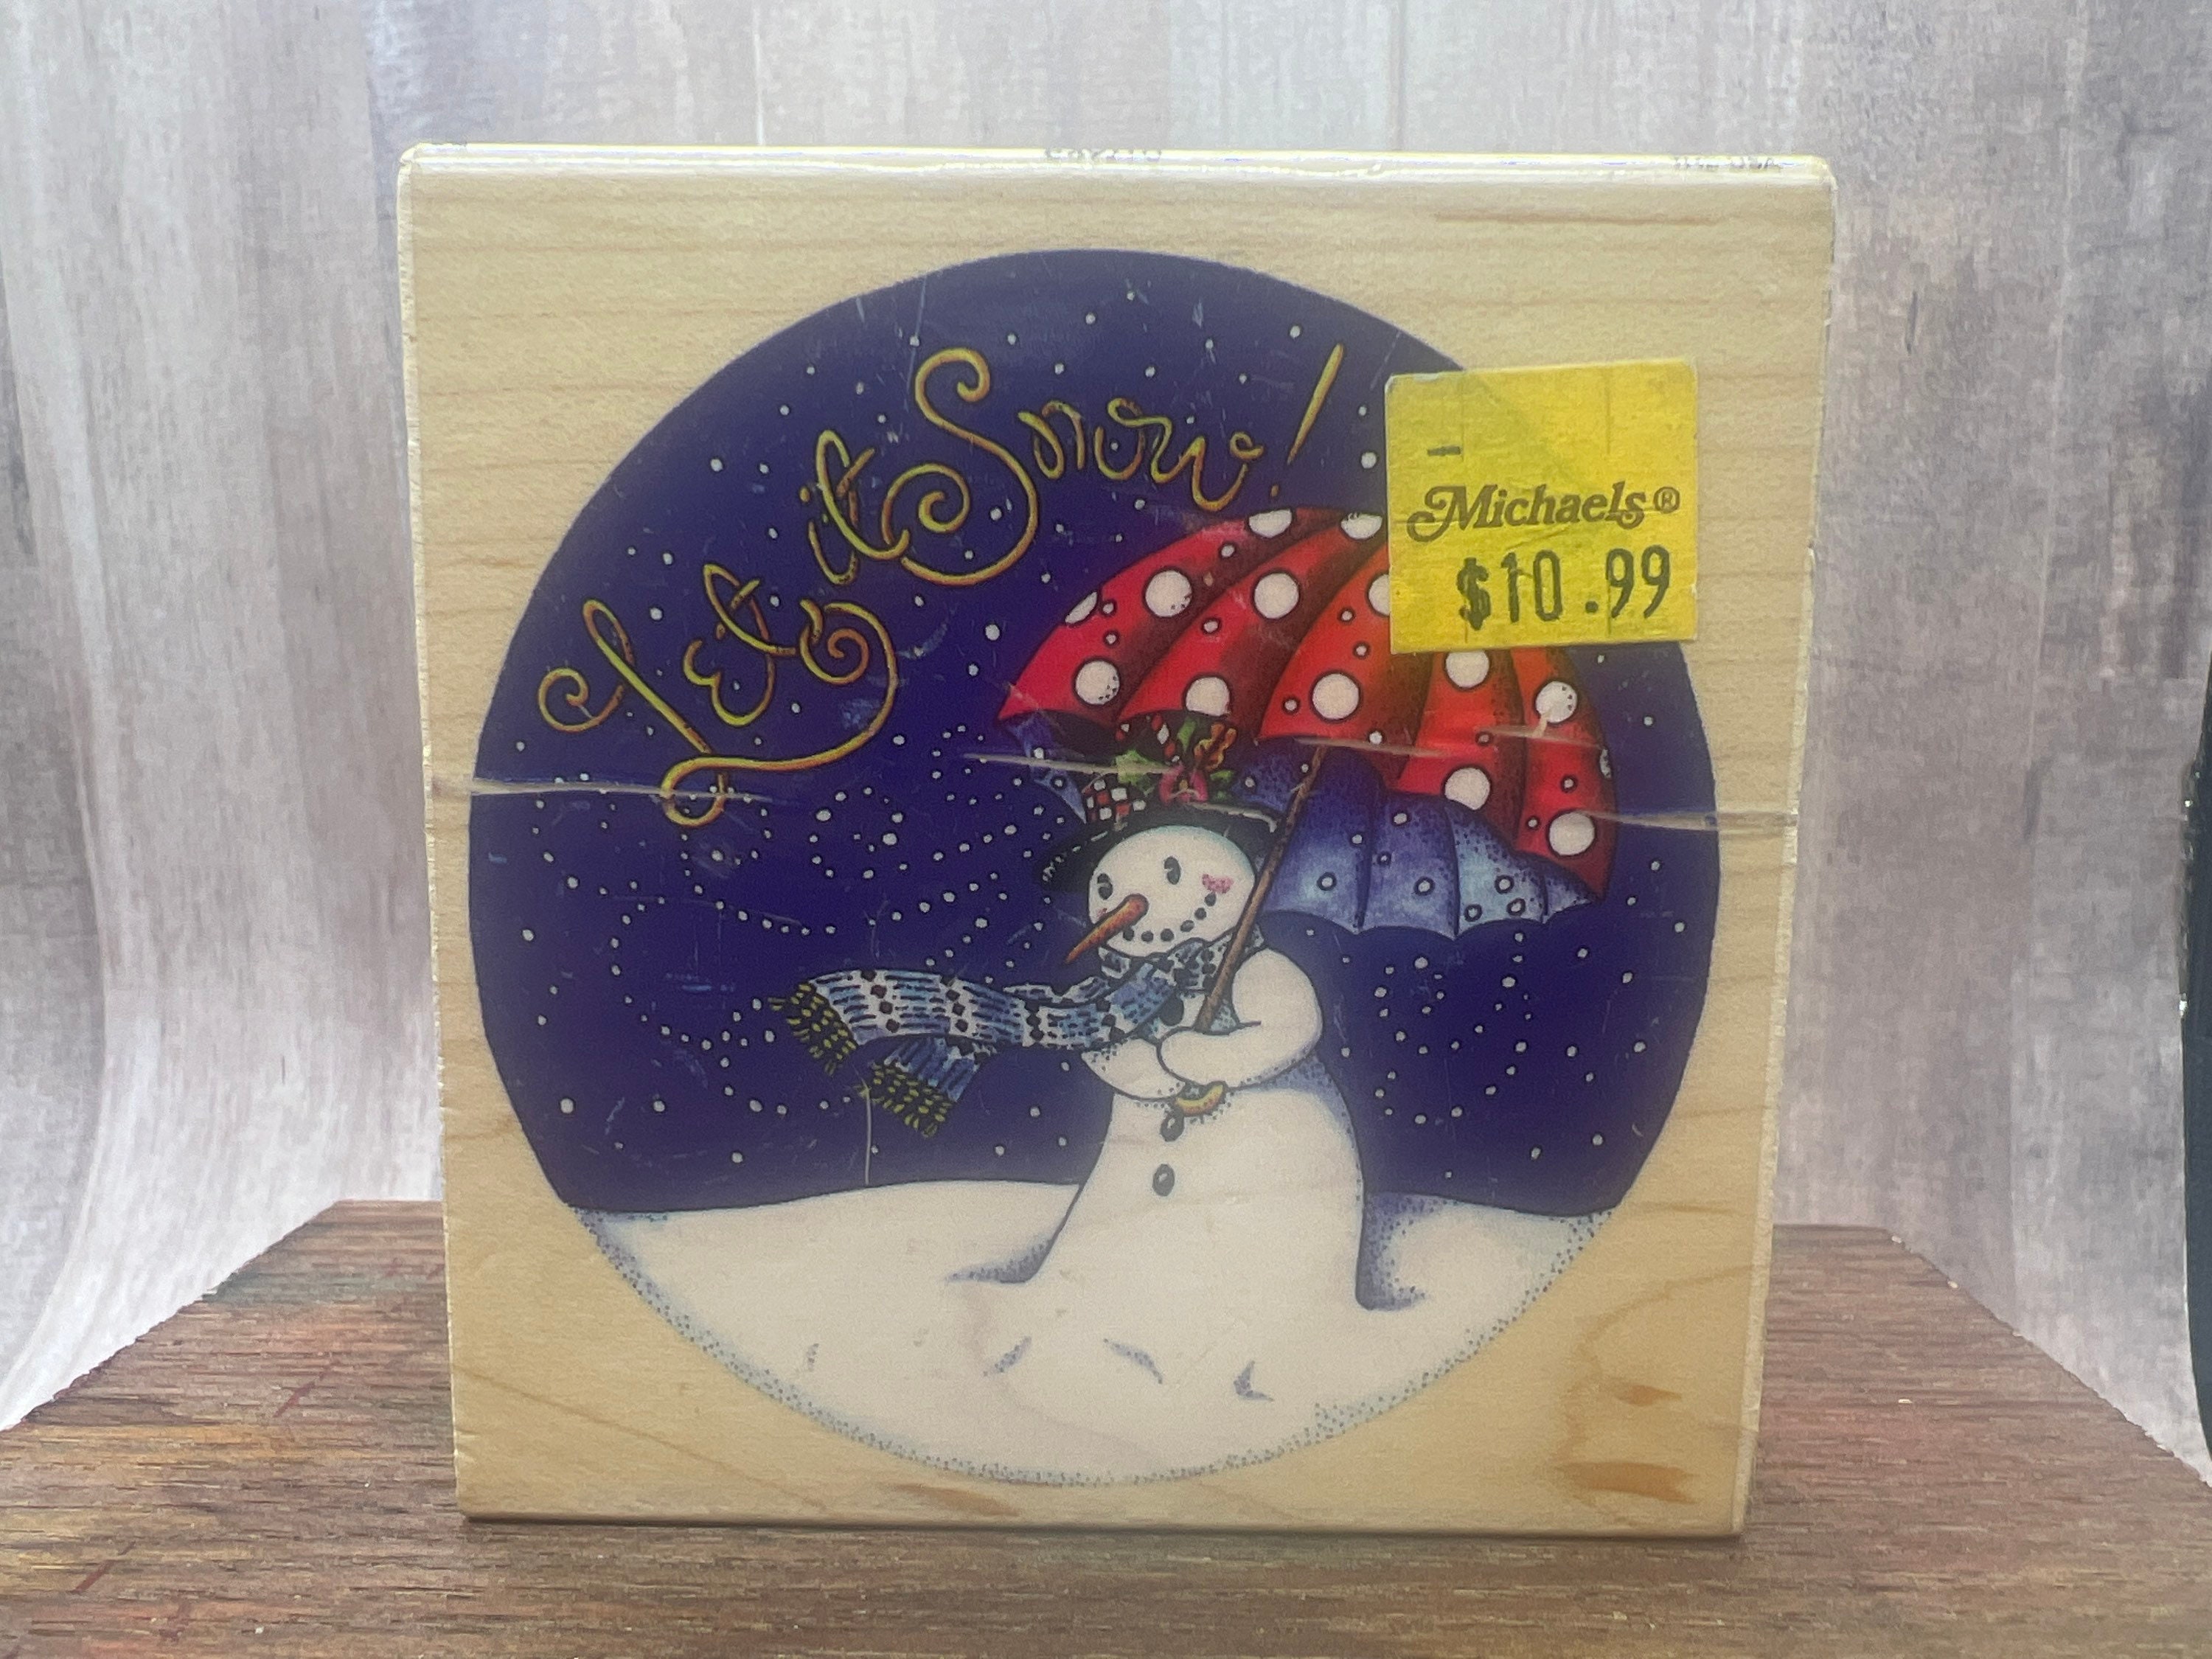 Tiny Snowflake Stamp Set, Snow Crystal Stamp, Winter Stamps, Ice